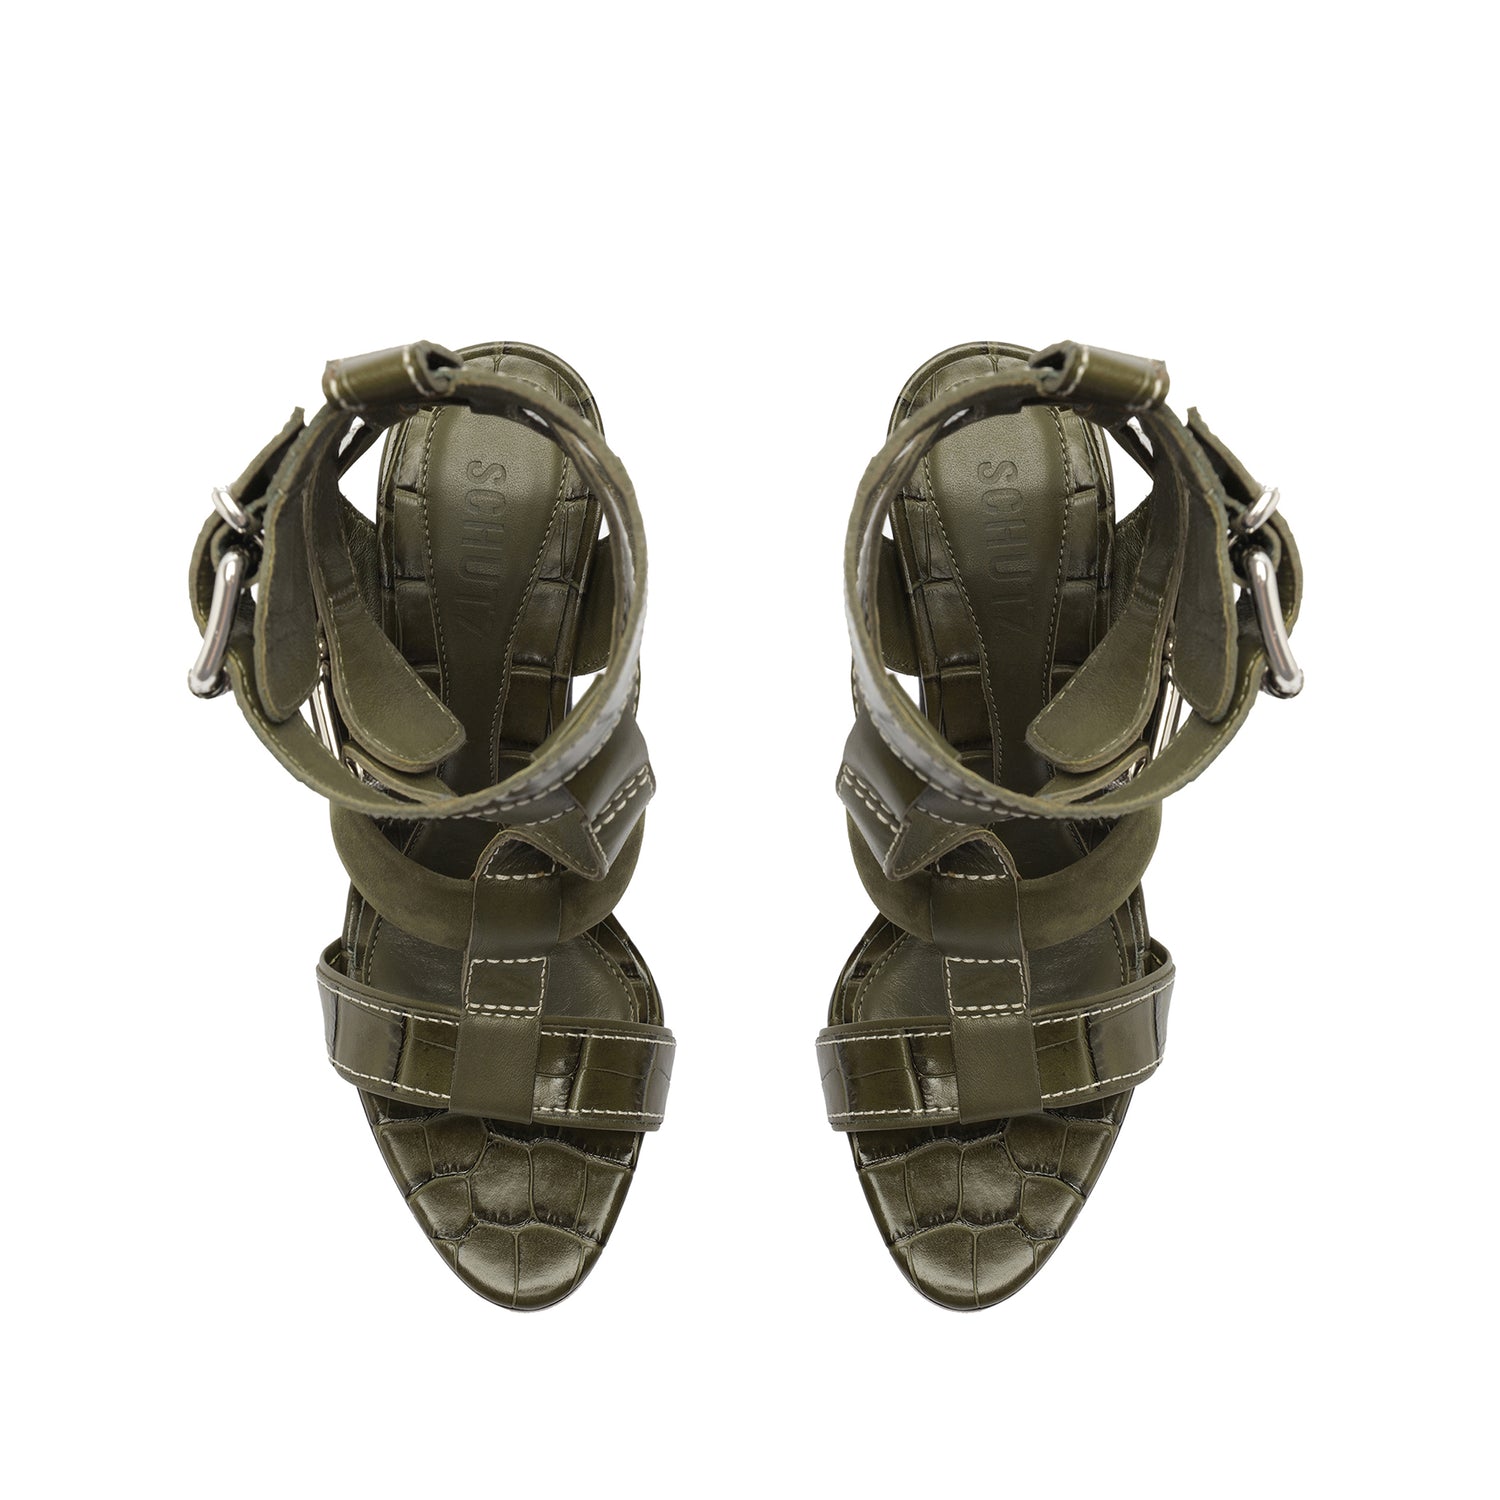 Chantelle Crocodile-Embossed Leather Sandal Sandals Fall 22    - Schutz Shoes